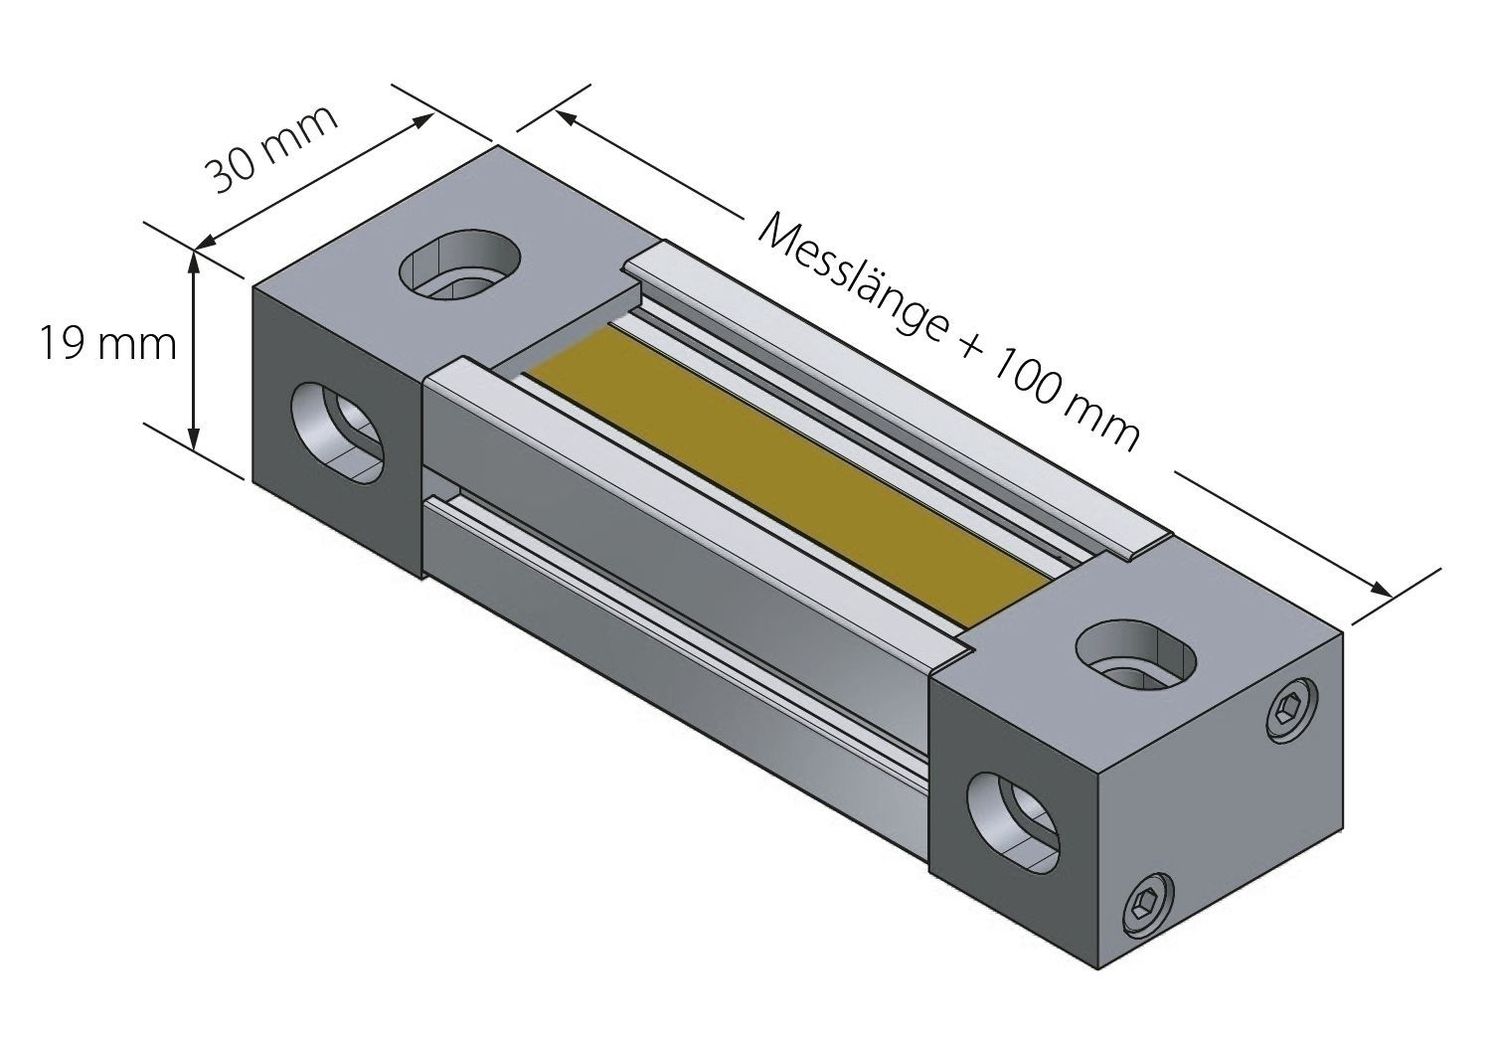 K+C Magnetmaßstab MS10A 150 mm - 5 µm | Verfahrweg 170 mm